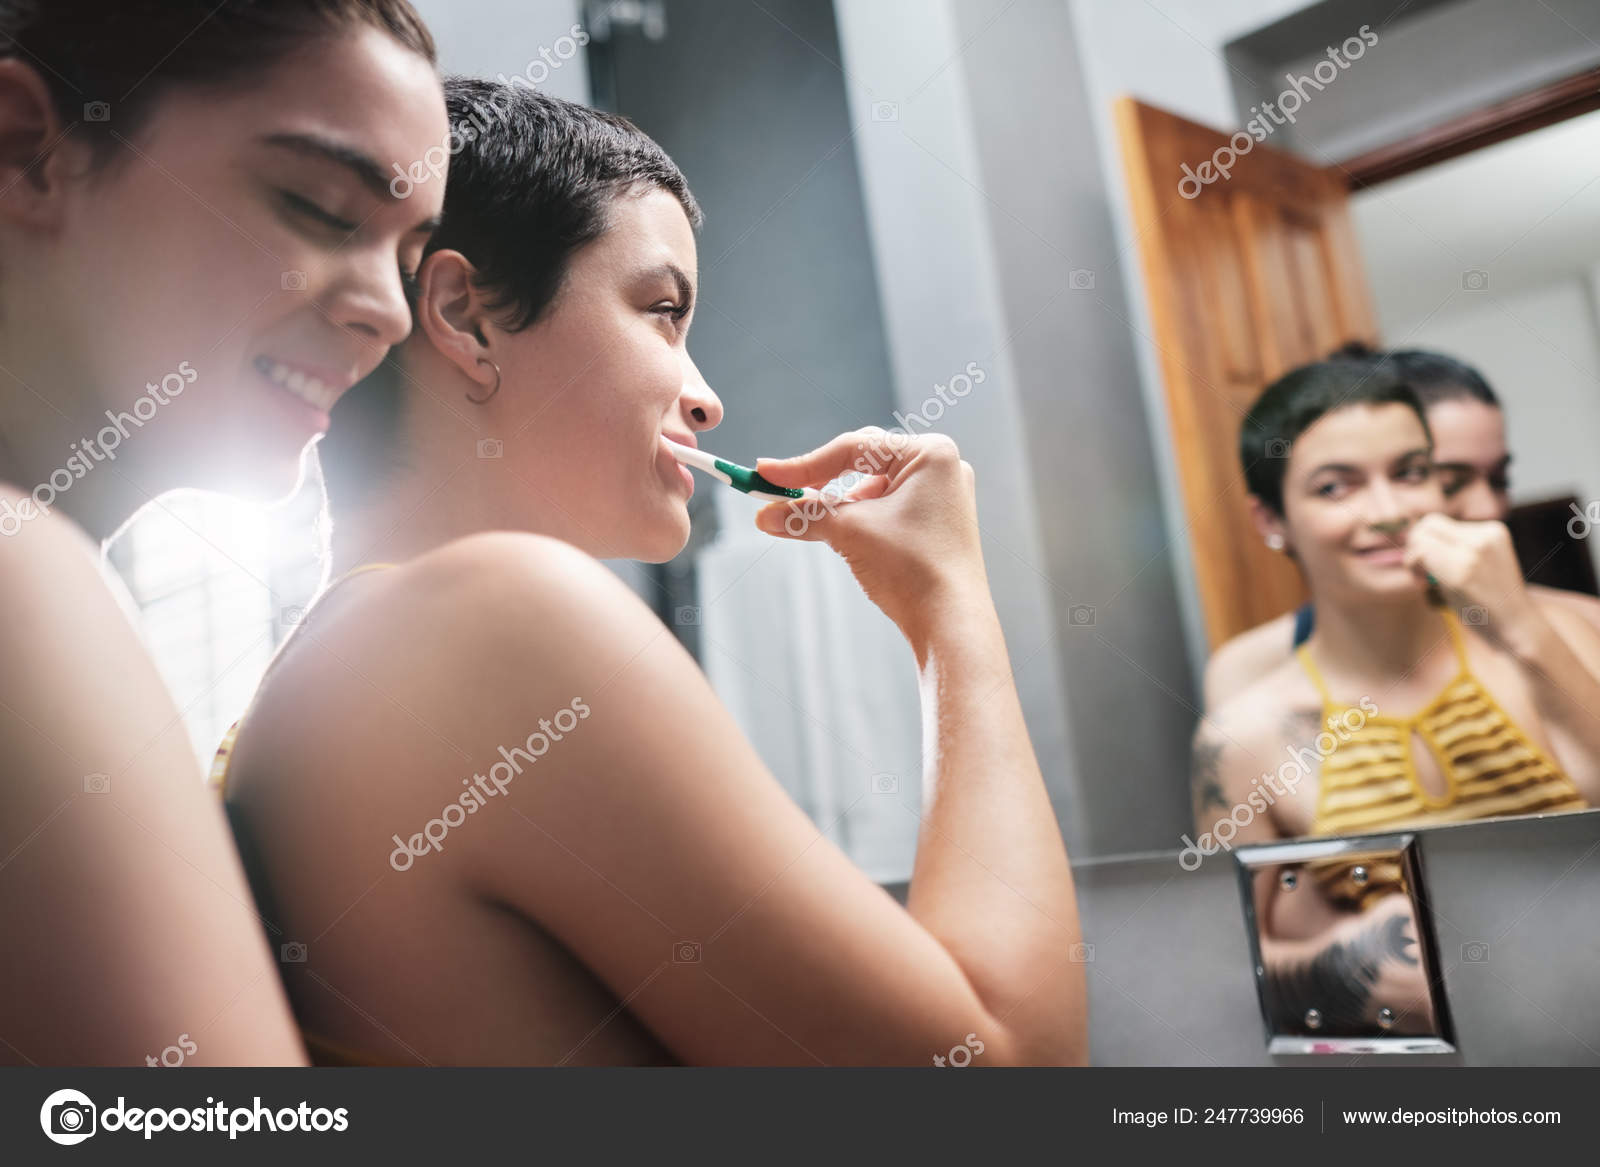 lesbian girls in shower